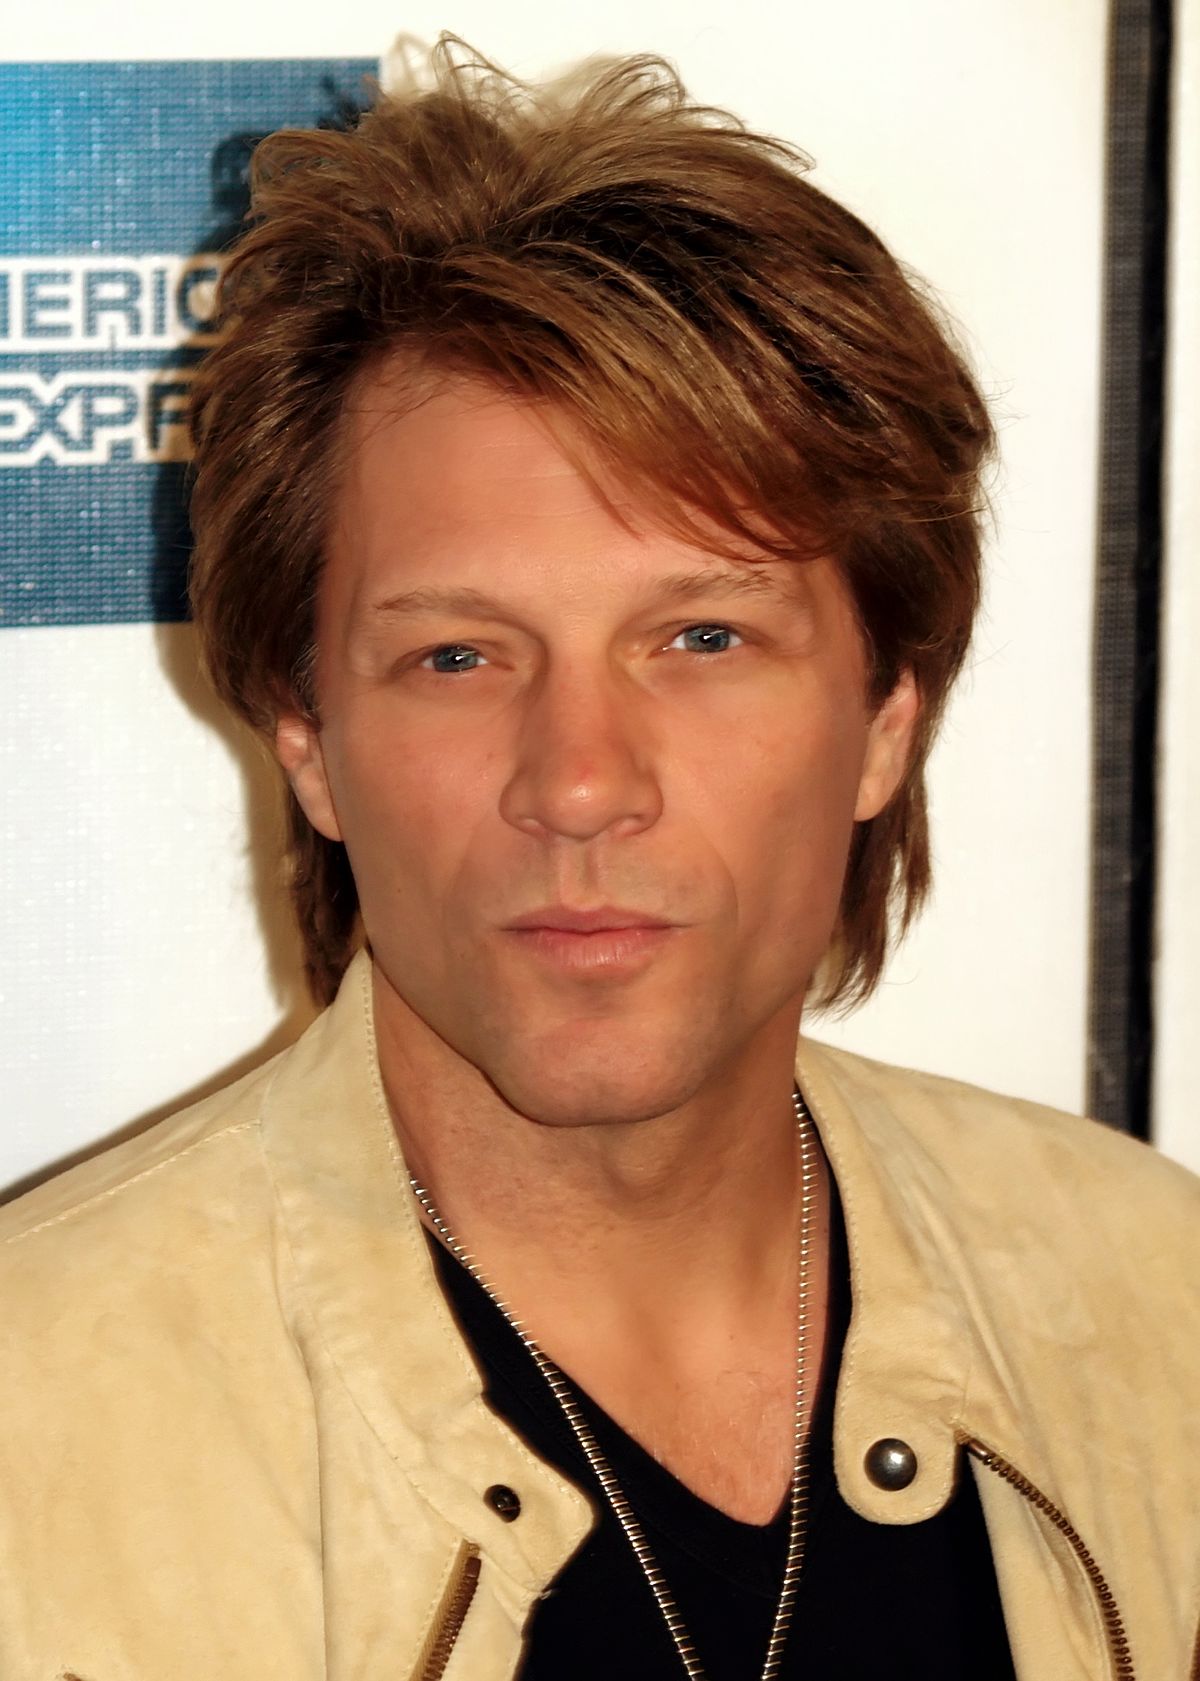 Jon Bon Jovi - Wikipedia